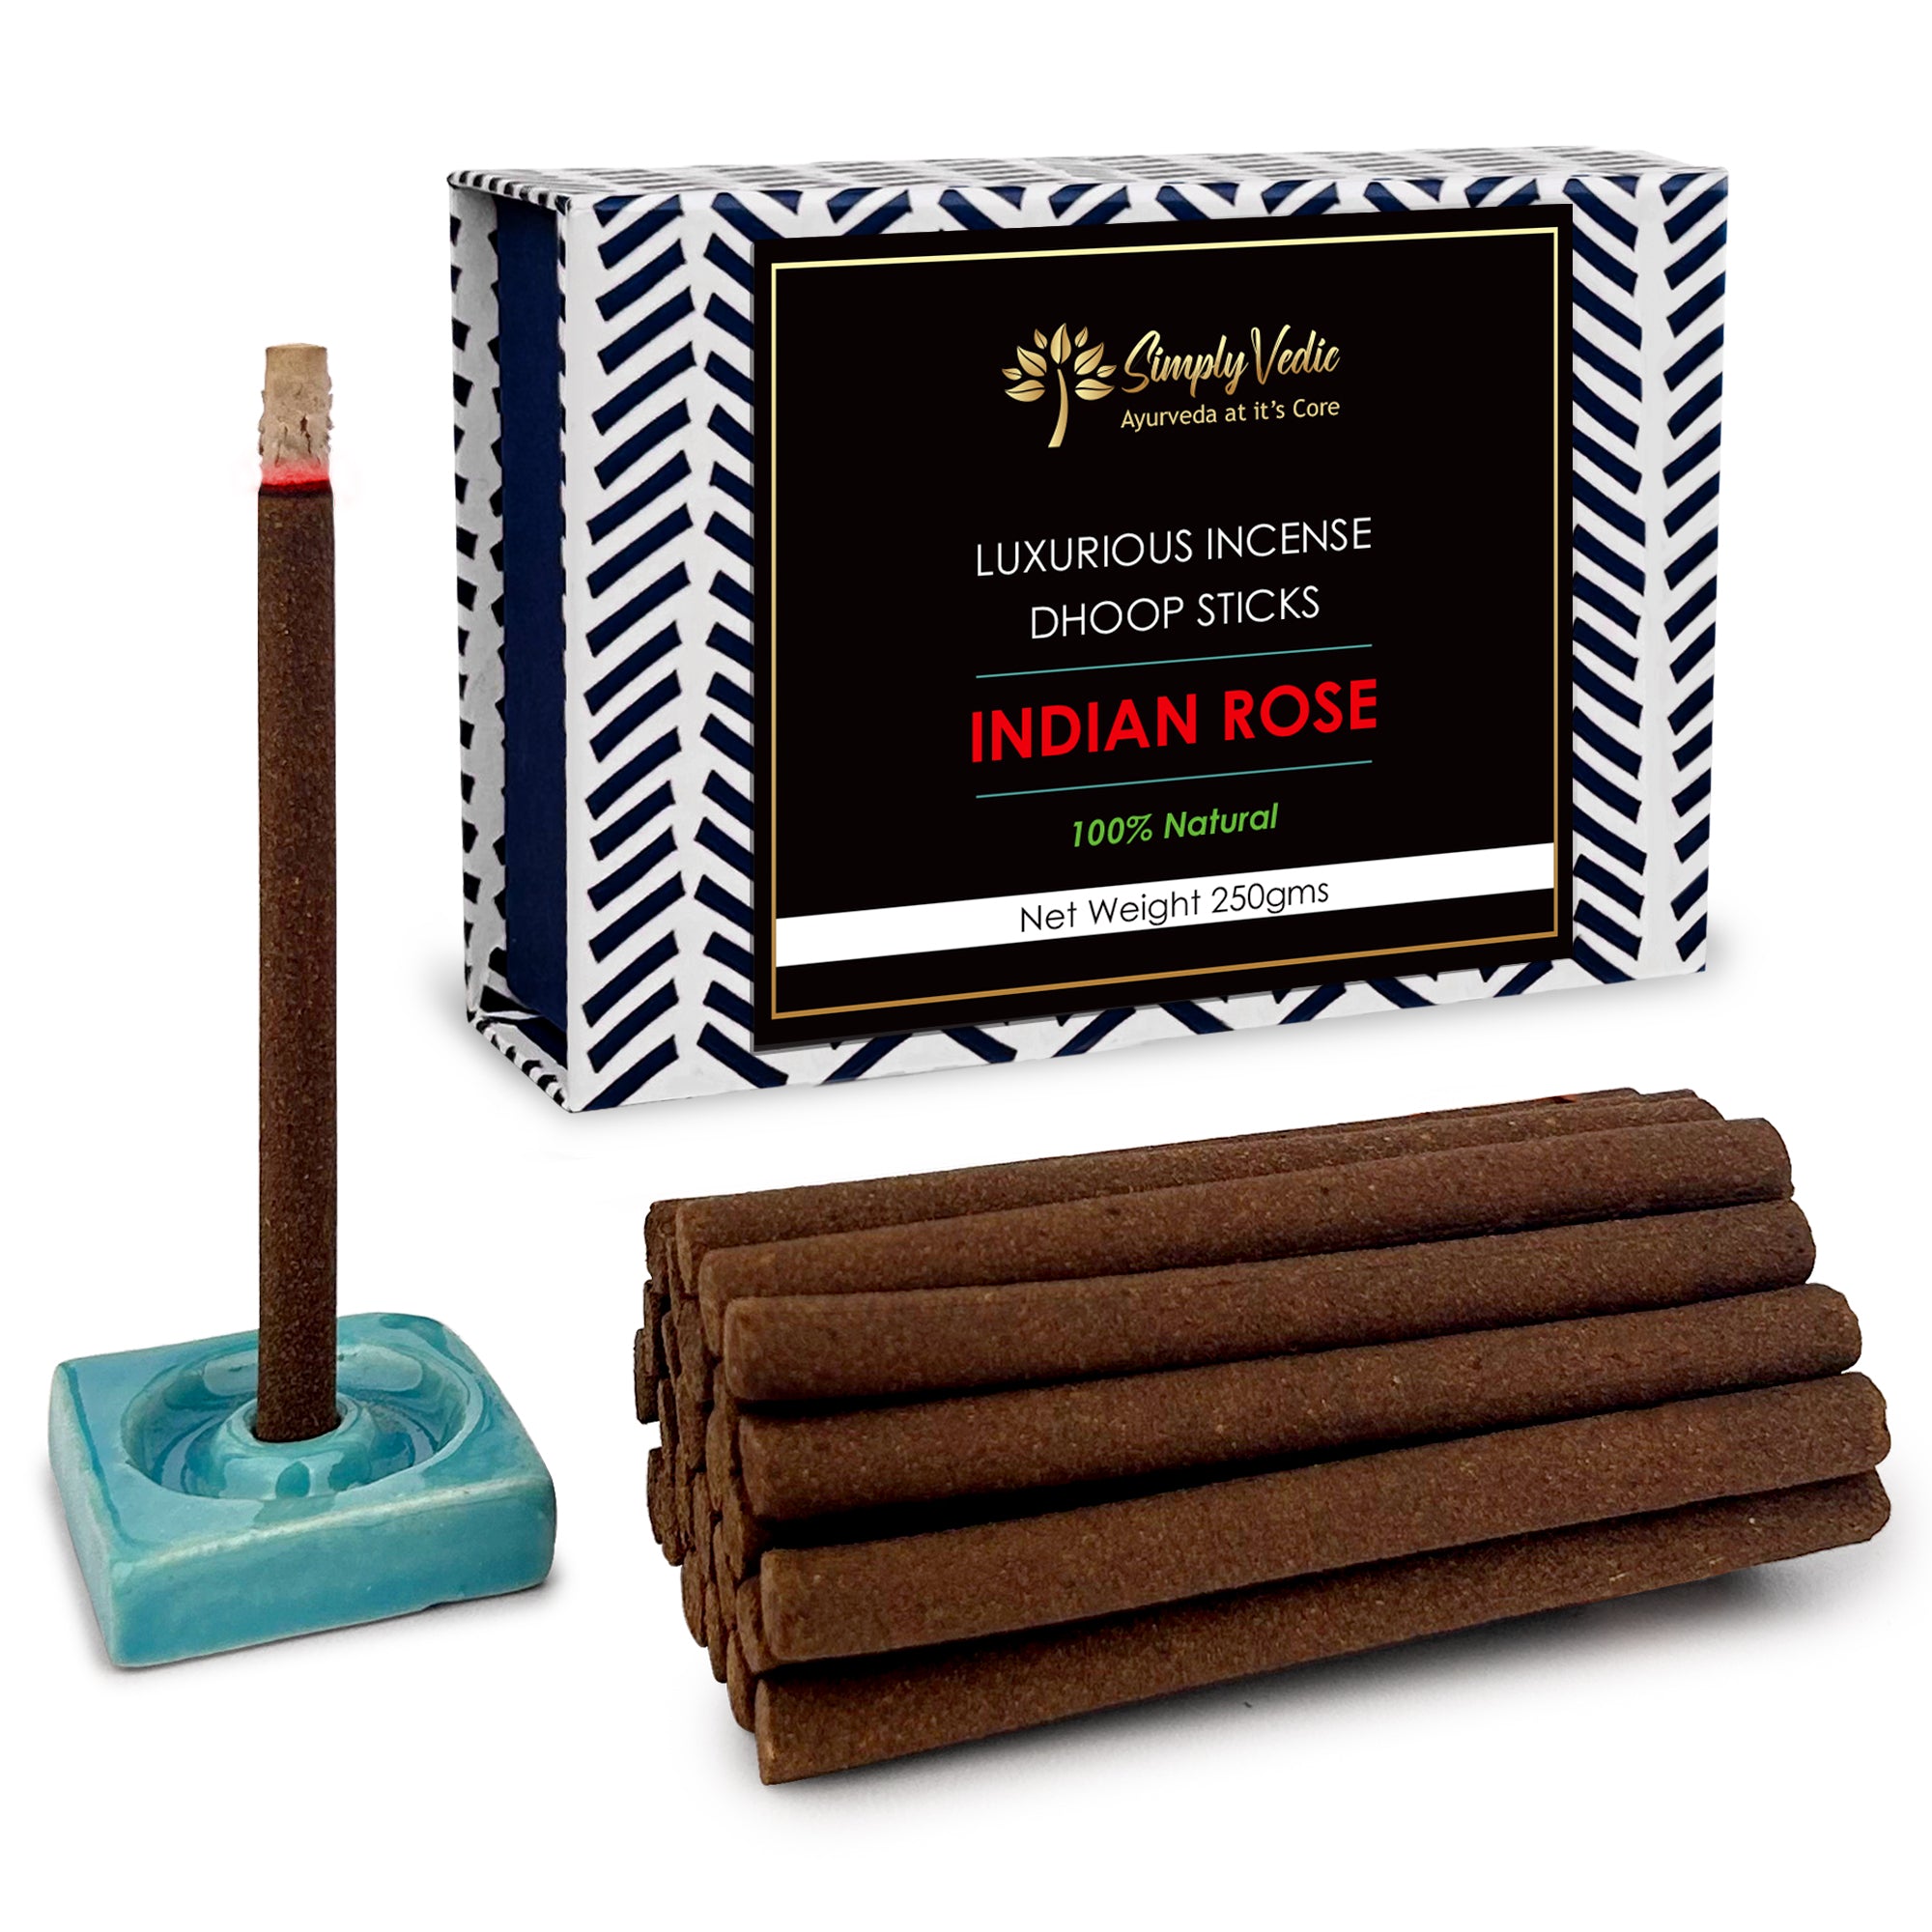 Simply Vedic's Indian Rose Dhoop Sticks